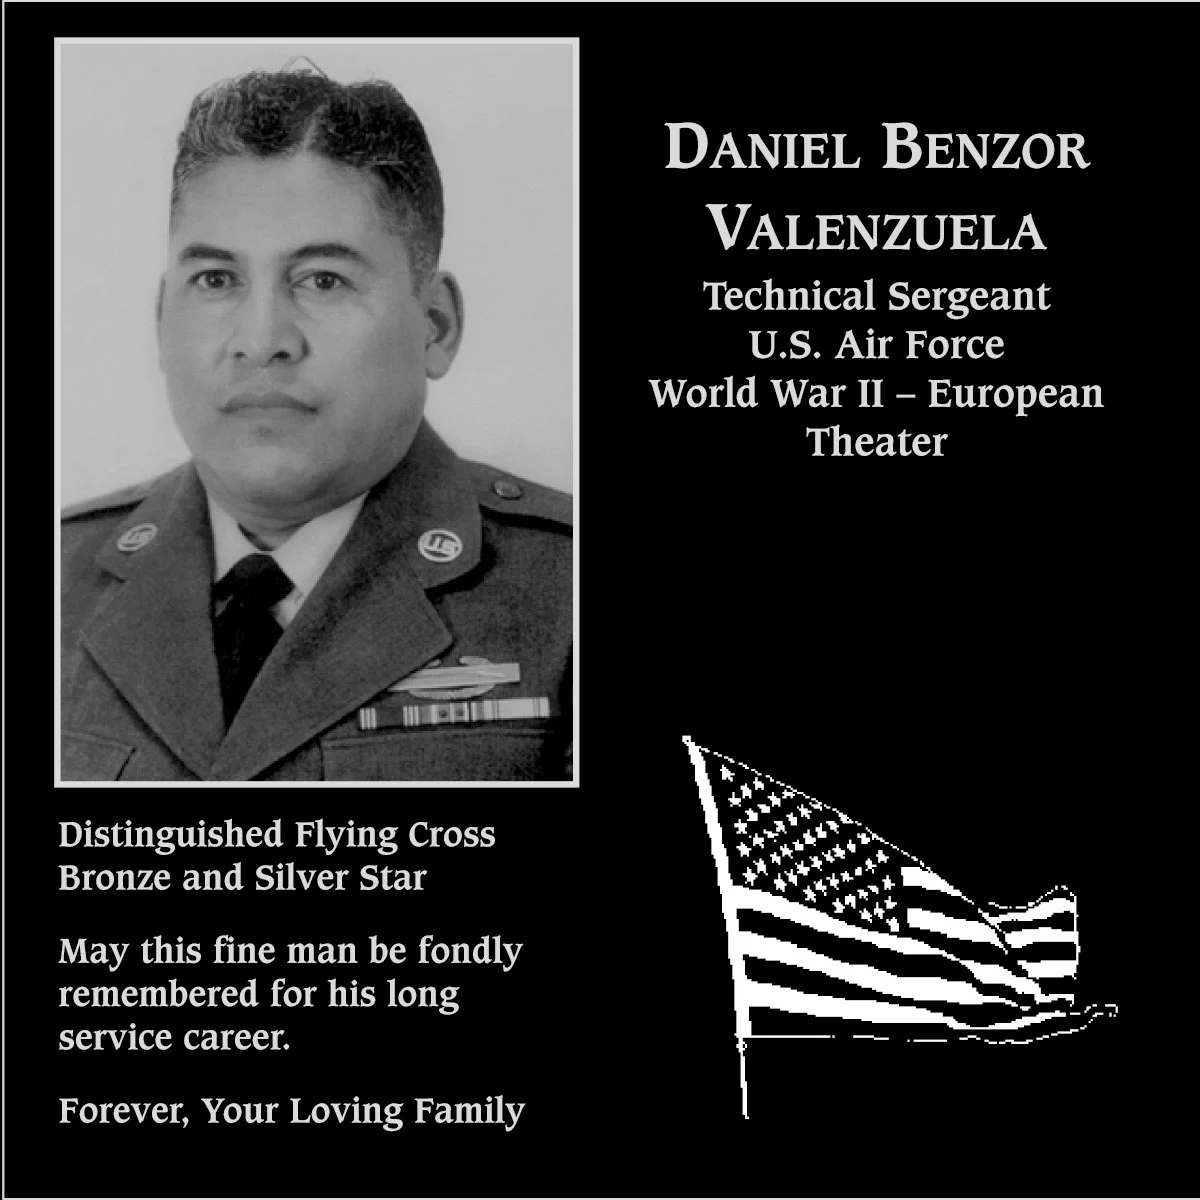 Daniel Benzor Valenzuela